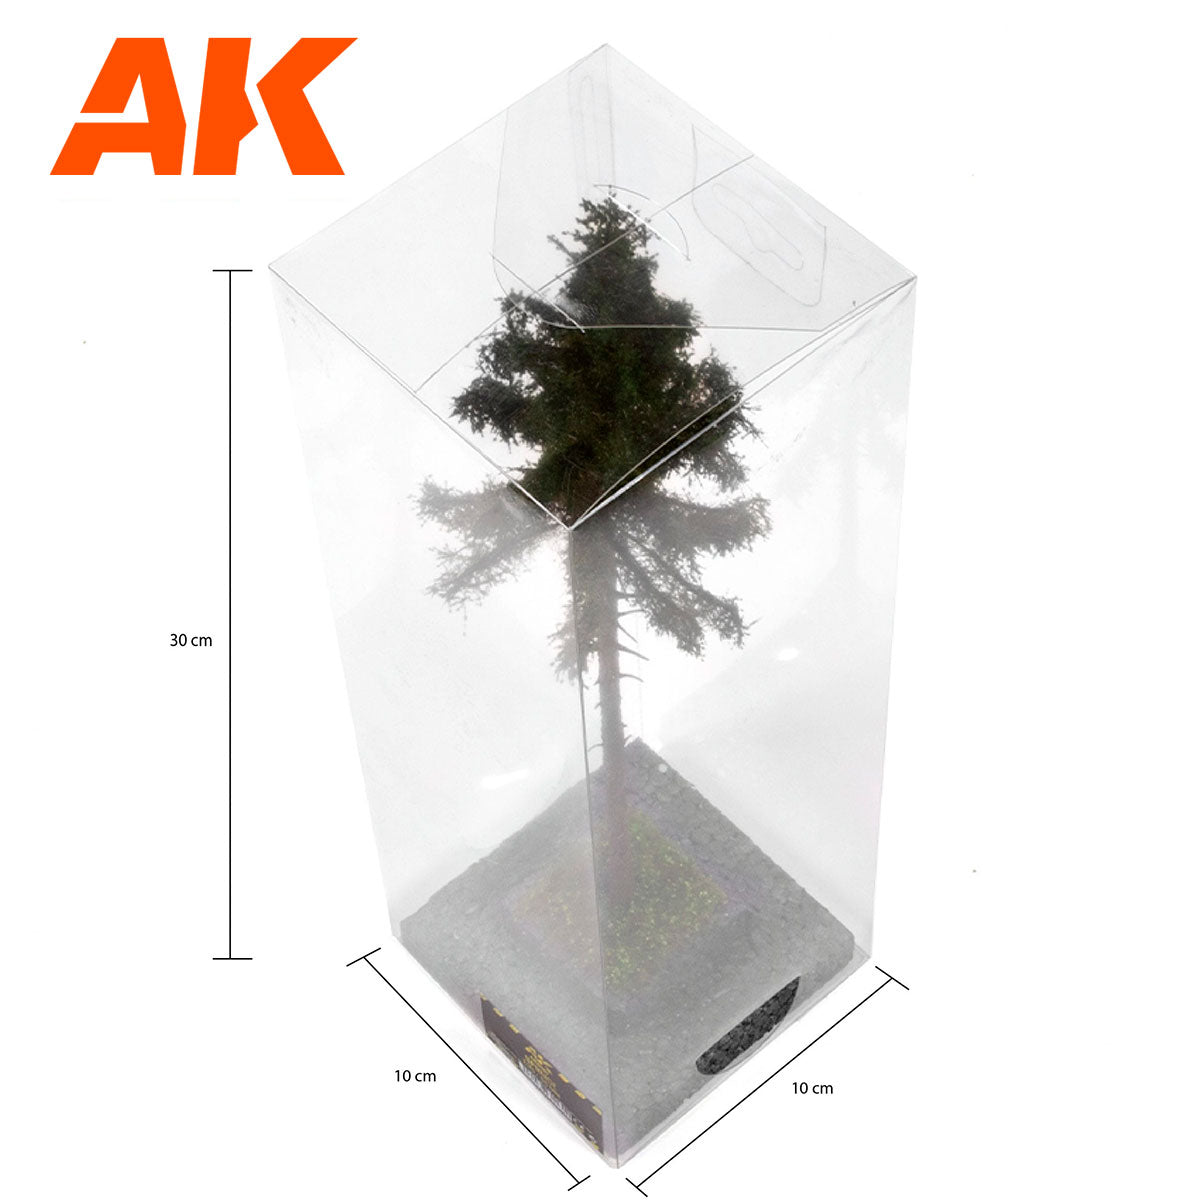 AK8187 - Spruce Tree 1/35